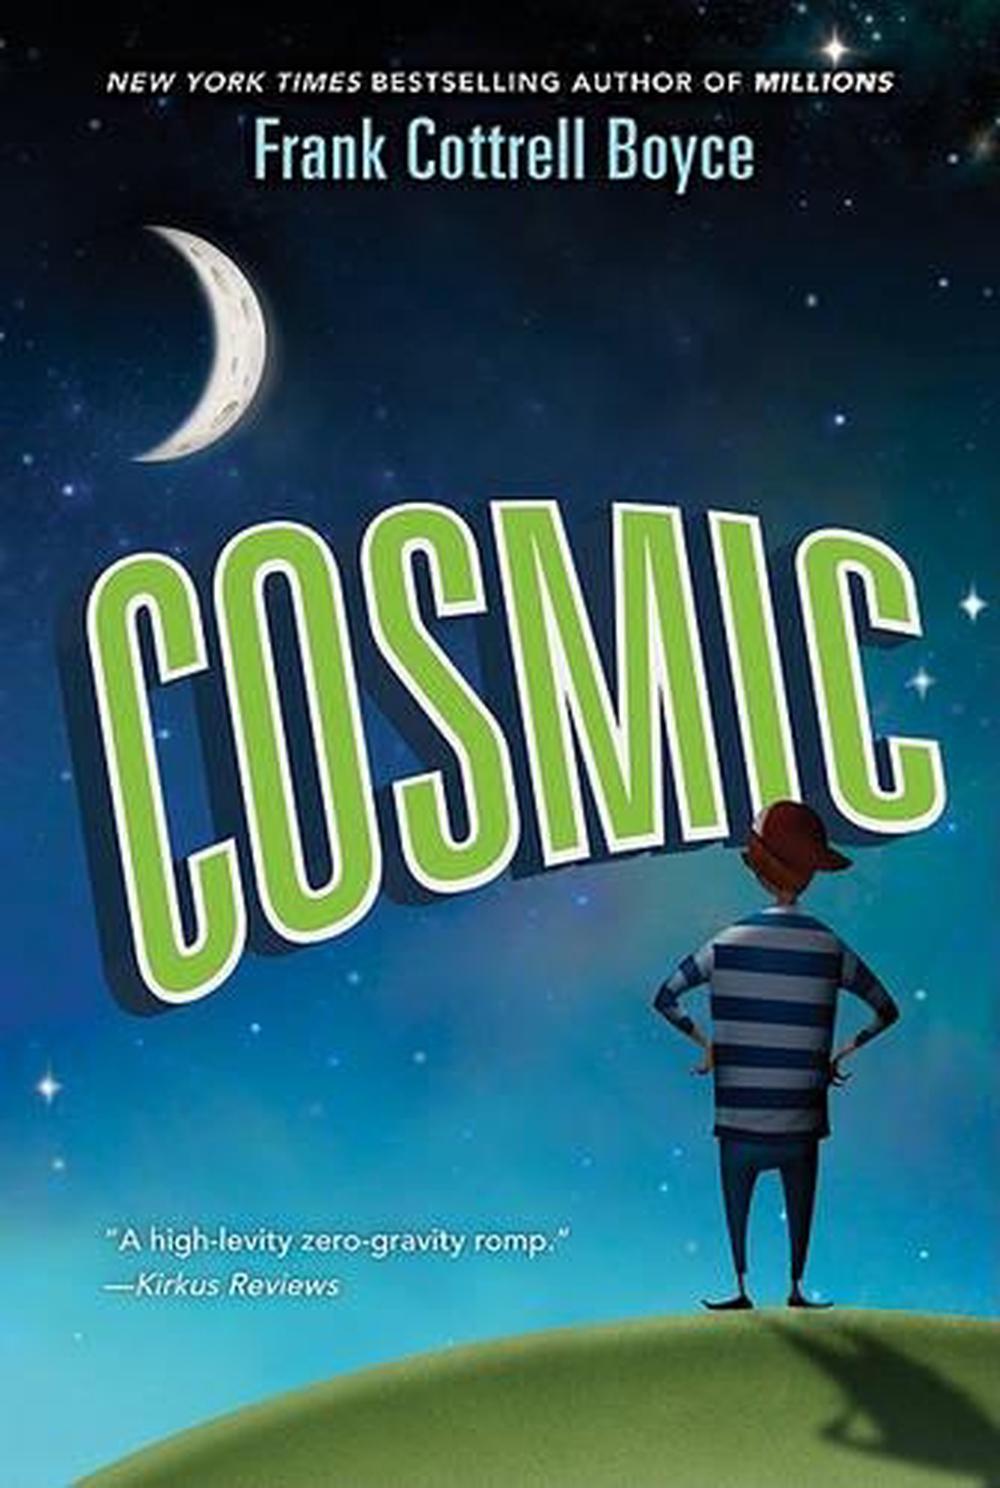 summary of cosmic by frank cottrell boyce